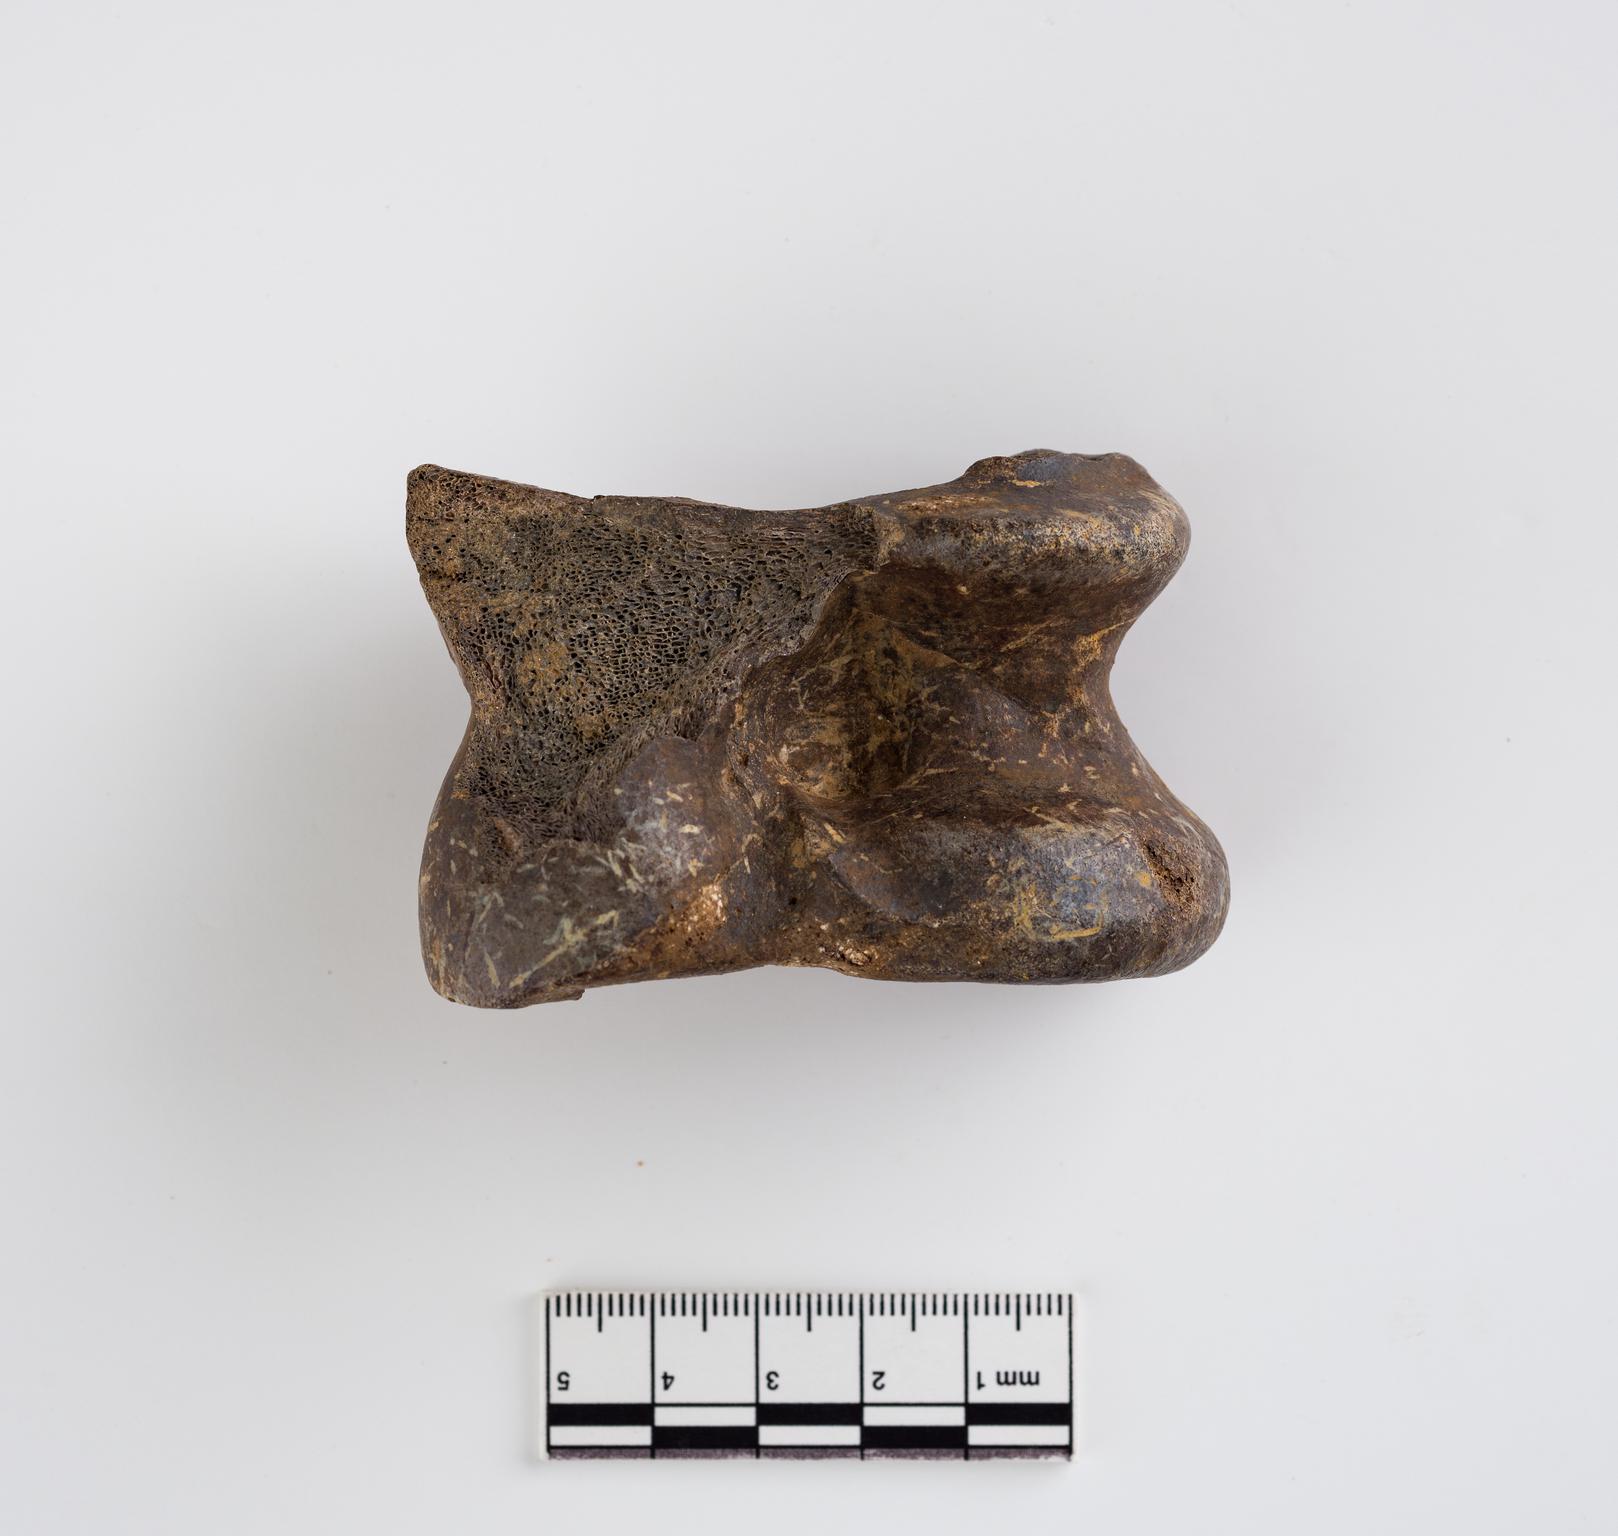 Pleistocene bison bone